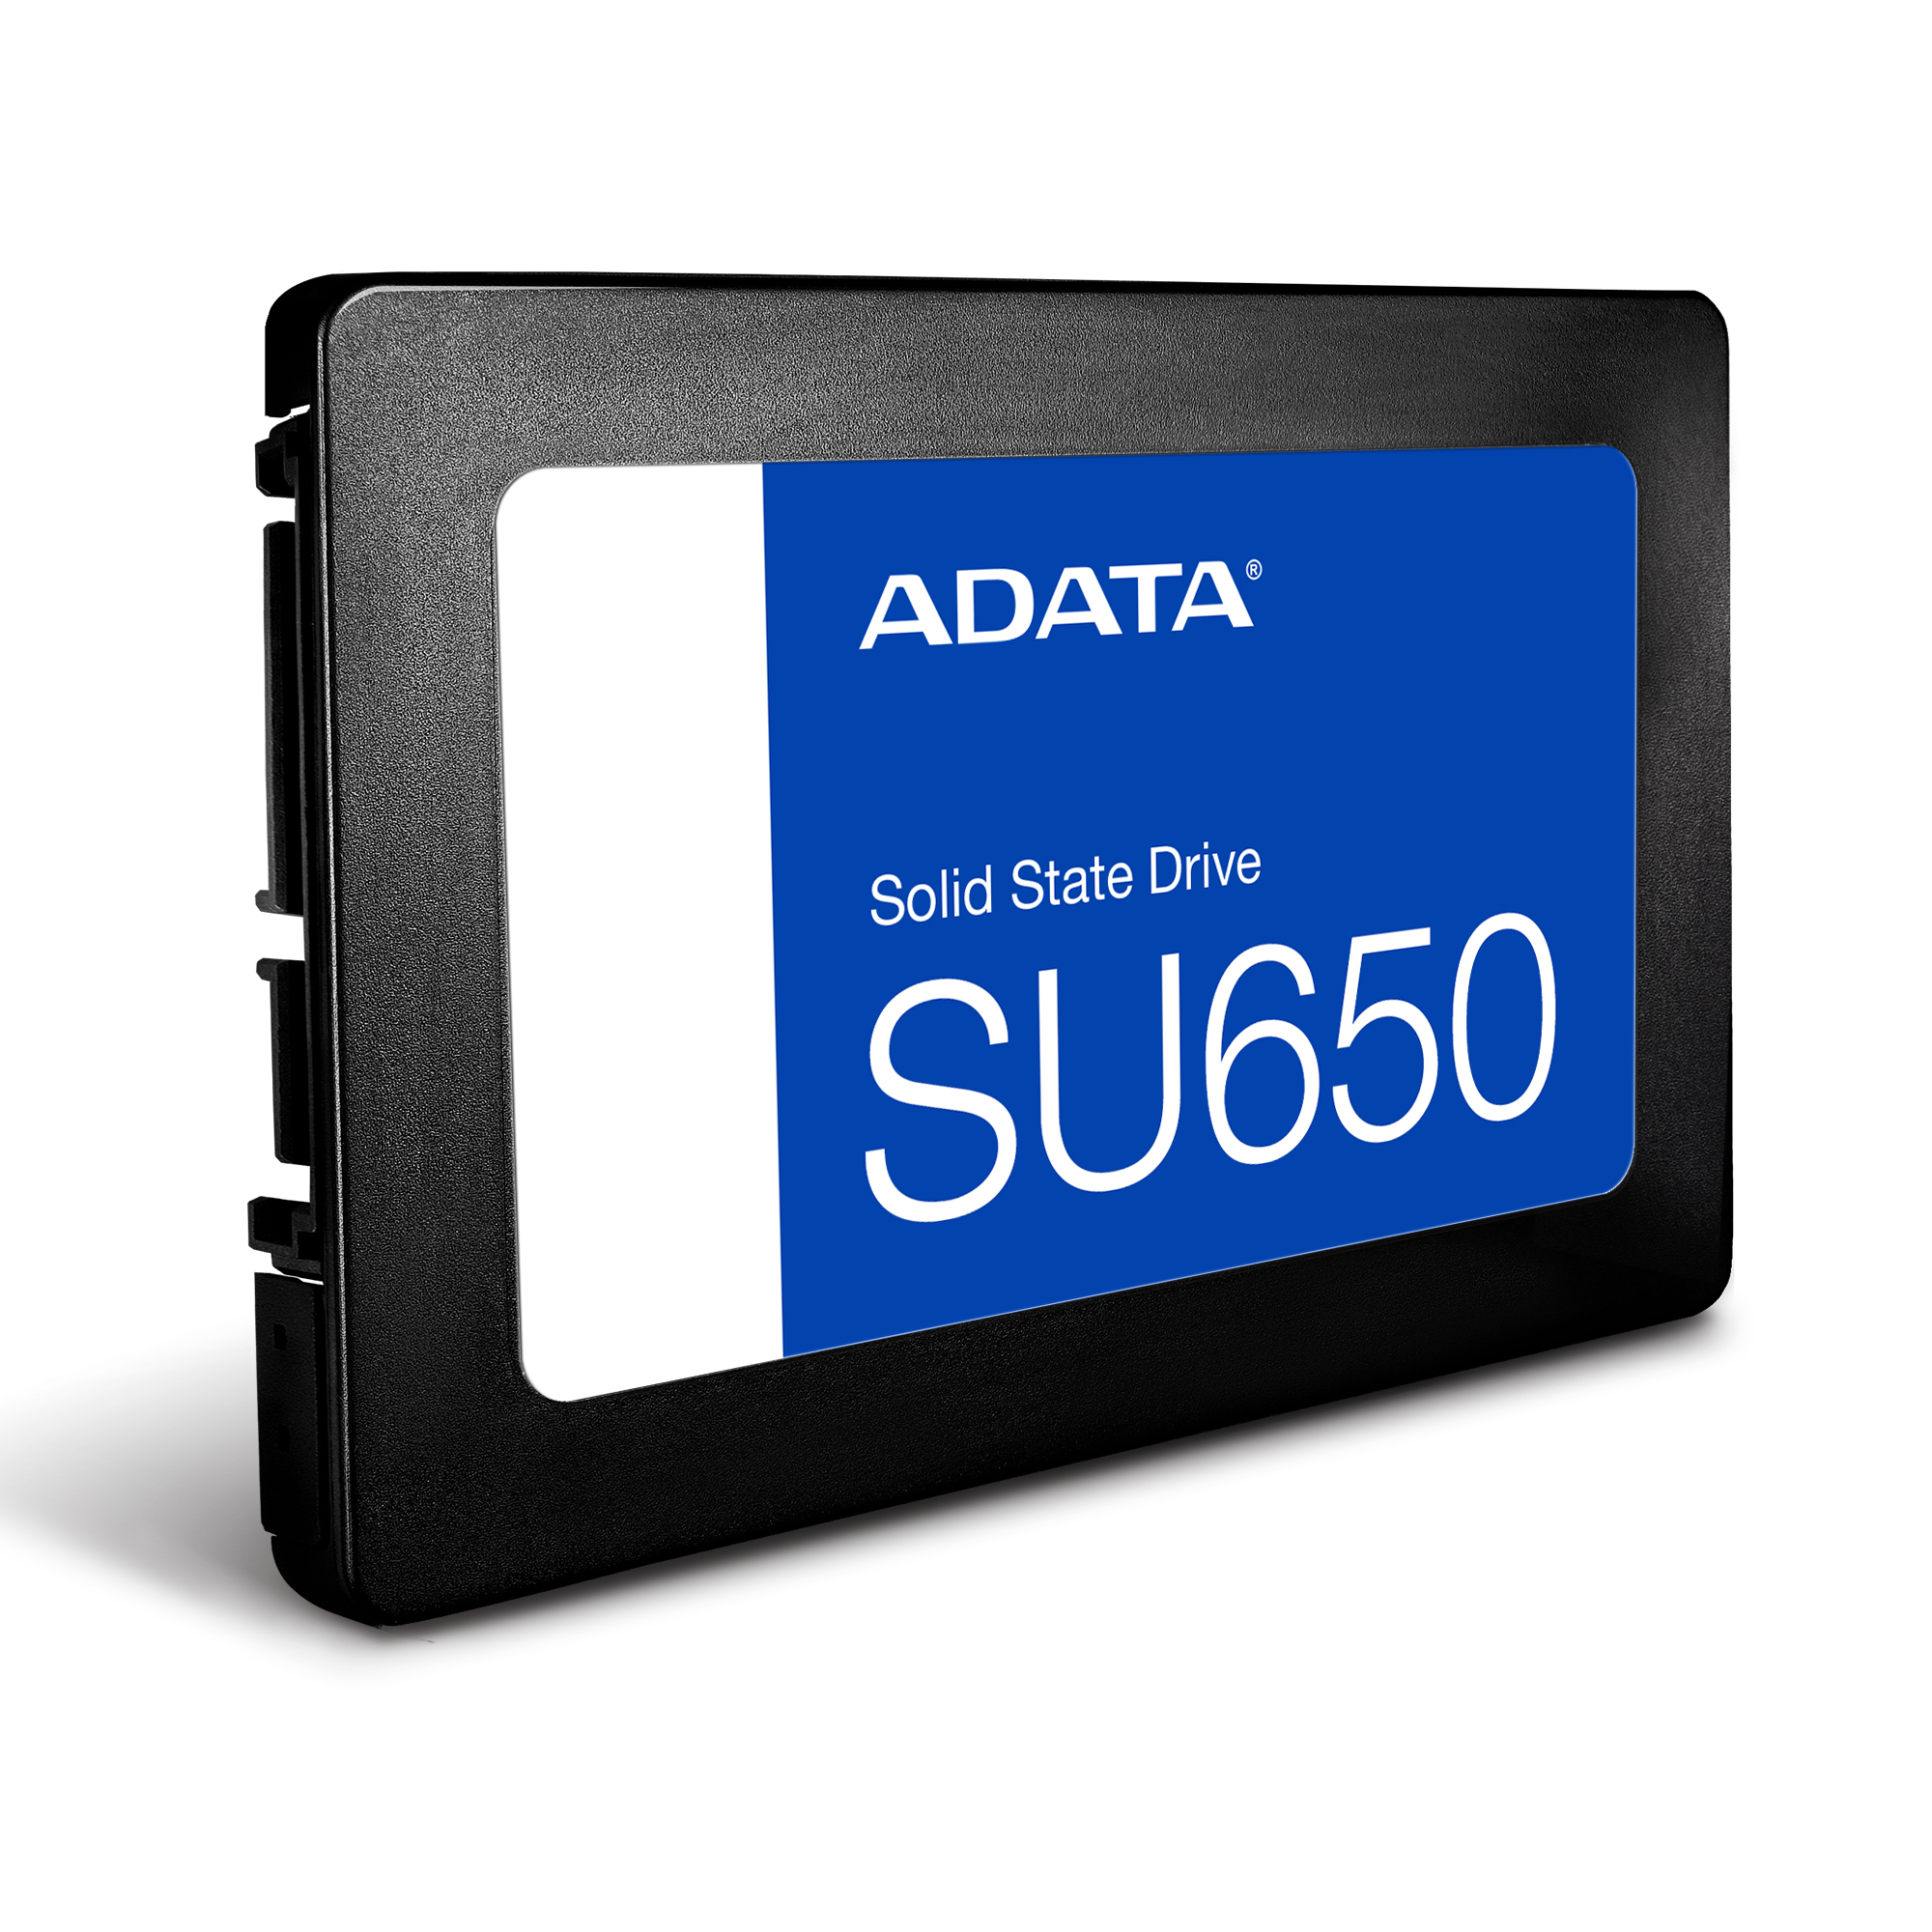 ADATA SU650 960GB SSD